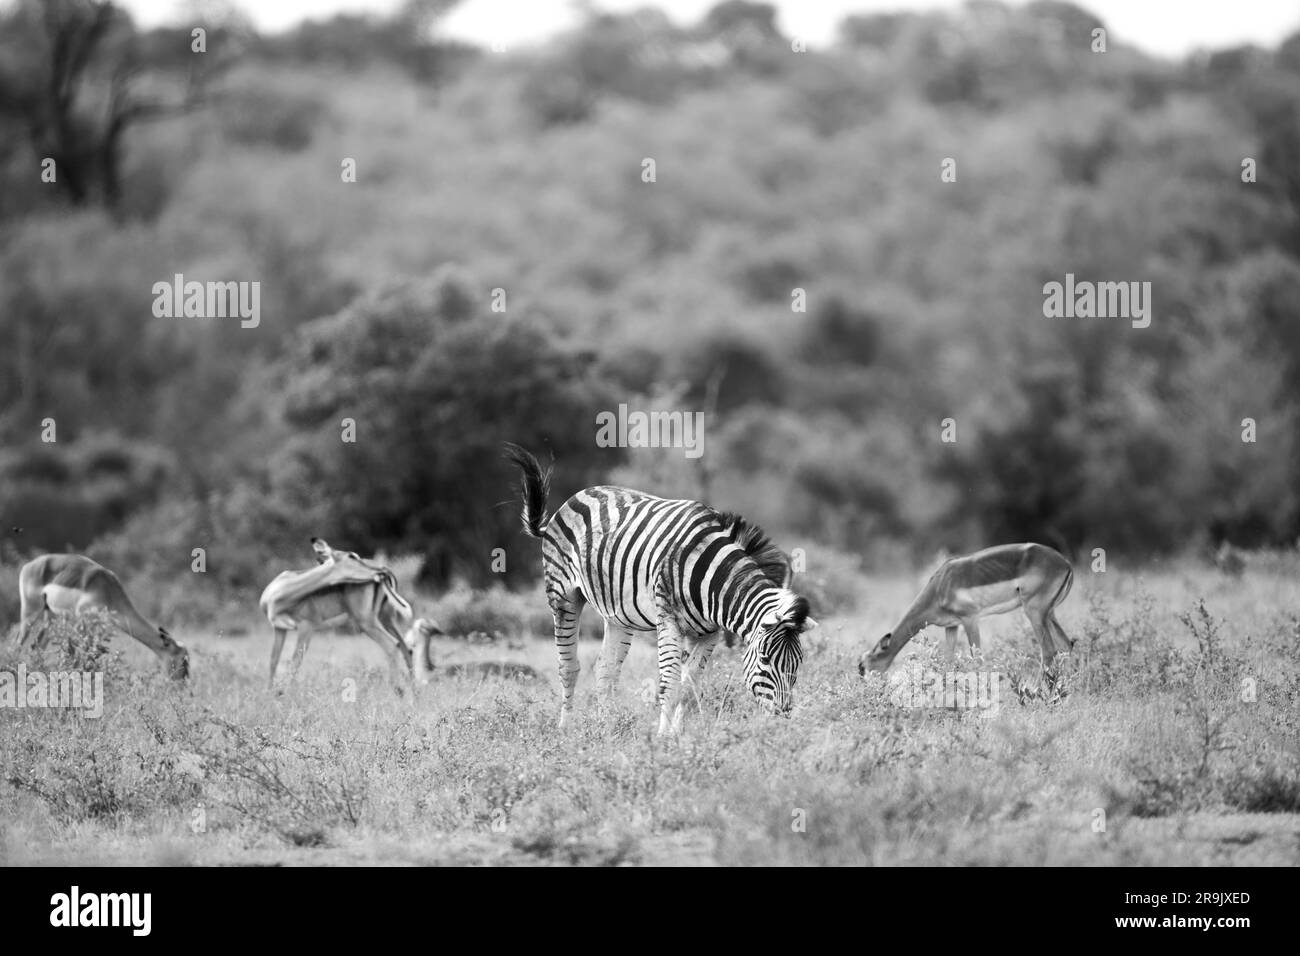 Zebra, Equus quagga e impala, Aepyceros melampus, pascolano insieme sull'erba, in bianco e nero. Foto Stock